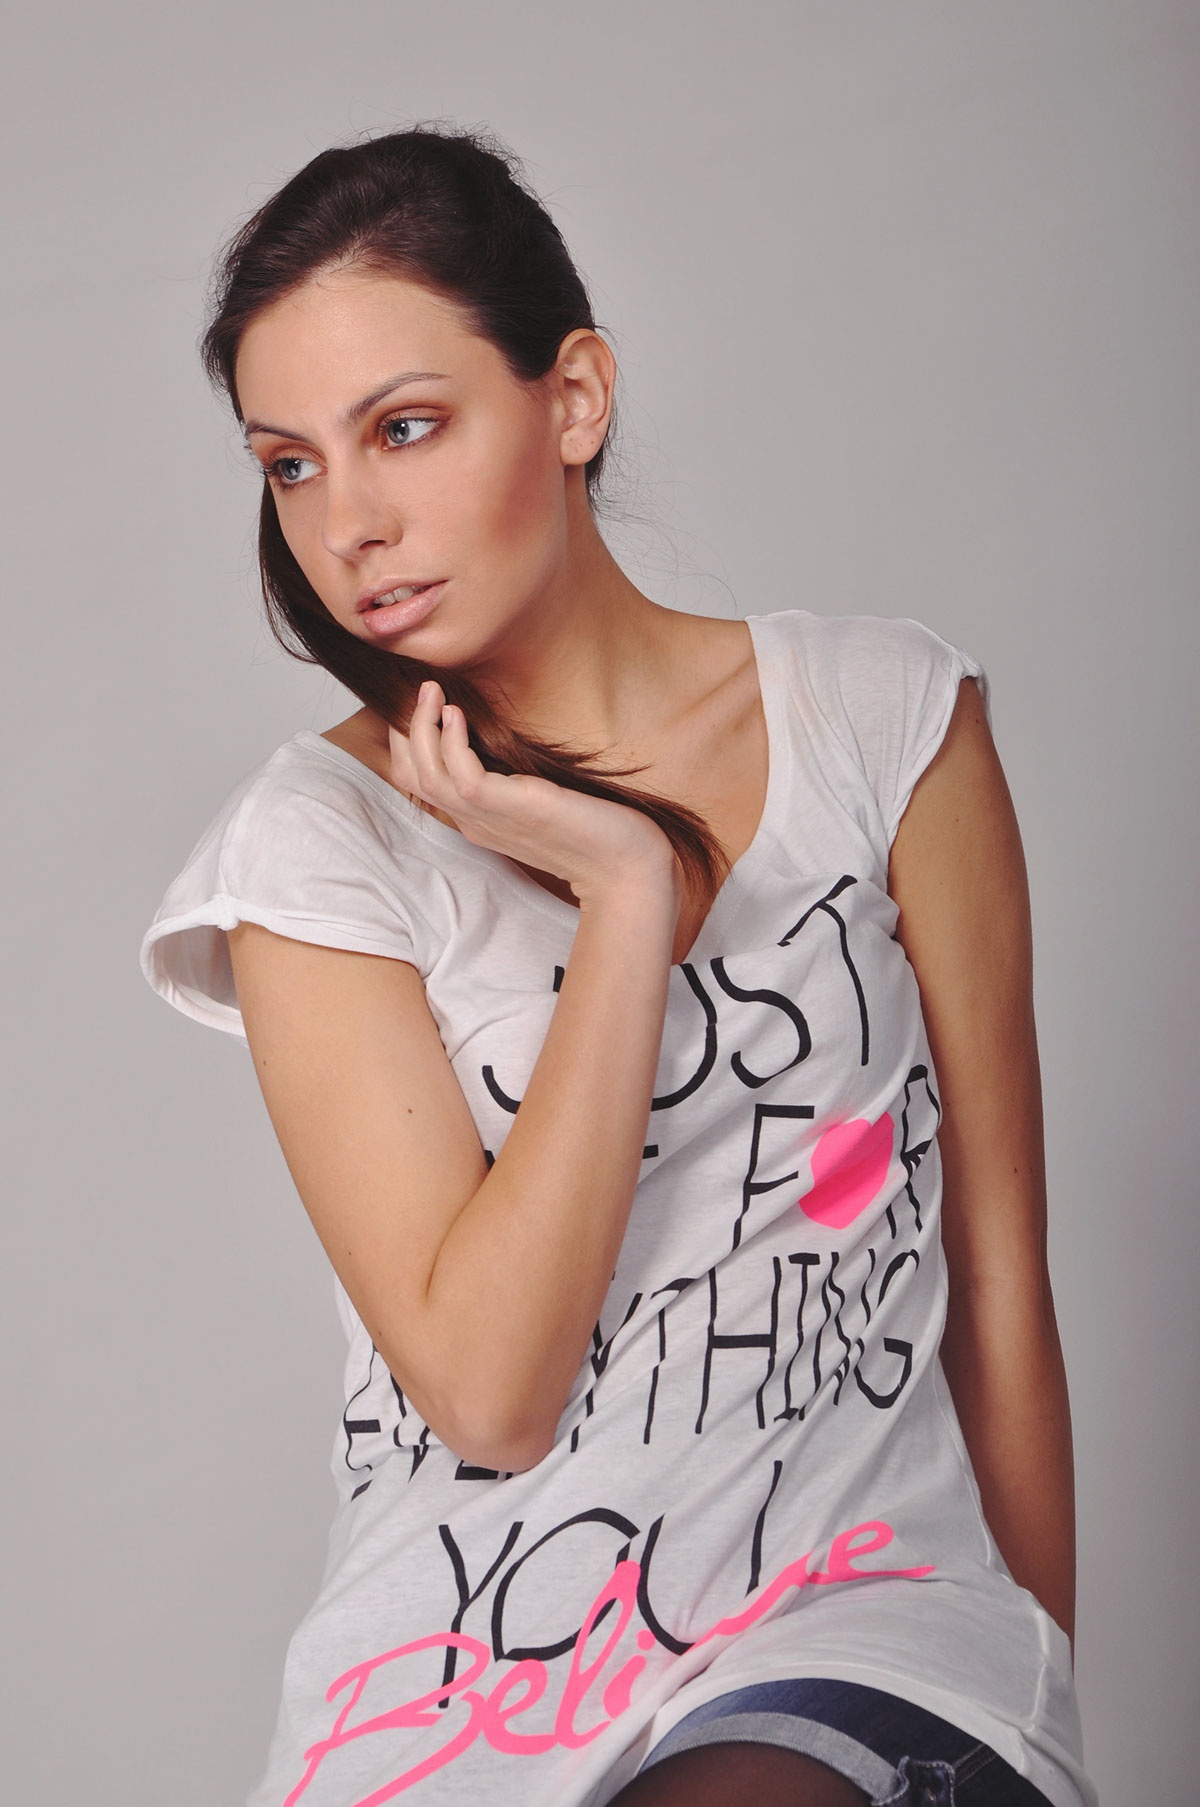 studio model sofia hassan girl portrait Portraiture lighting